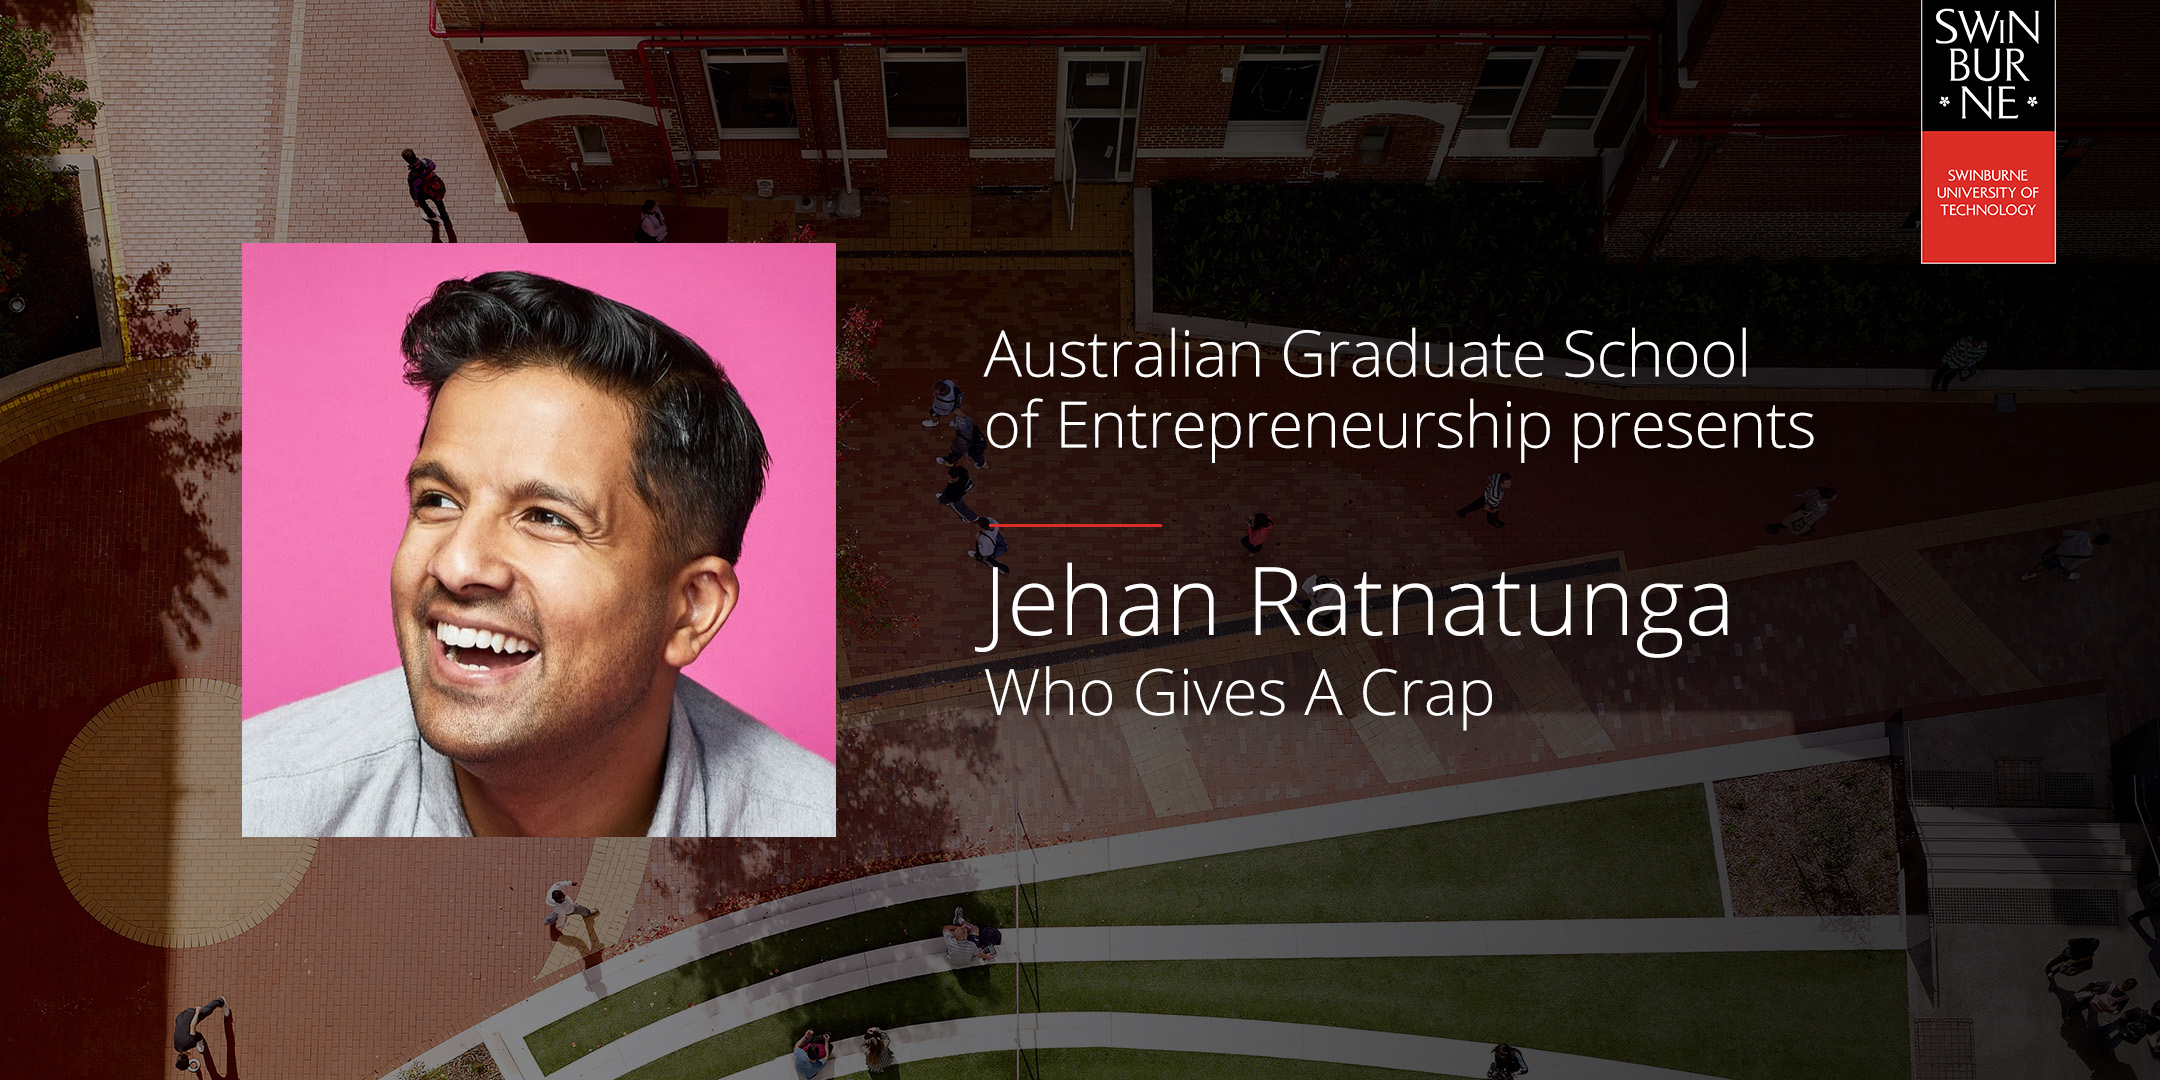 Promotional banner for upcoming event presented by Jehan Ratnatunga from Australian Graduate School of Entrepreneurship.